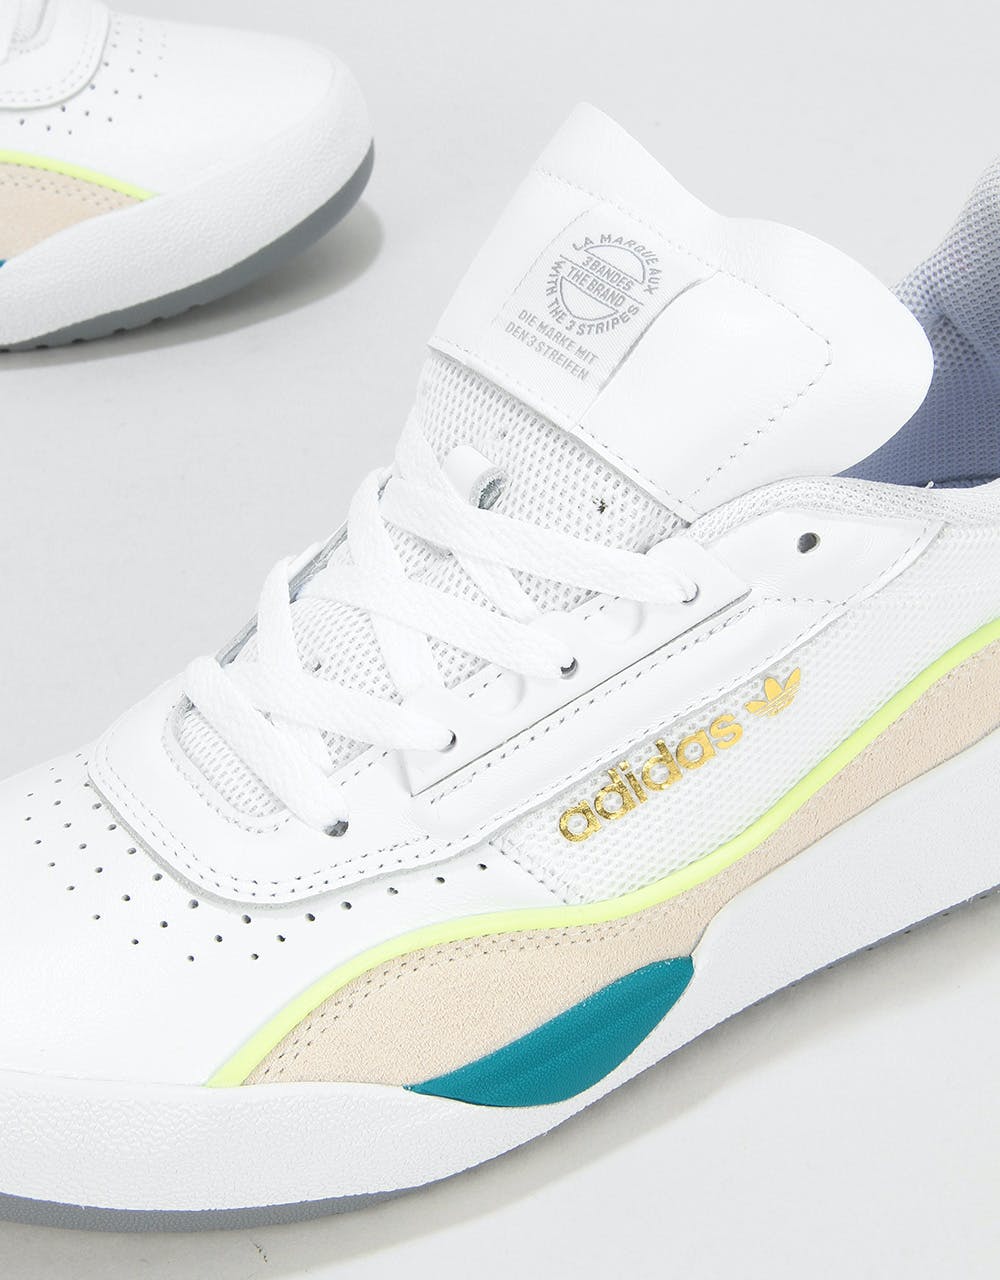 Adidas Liberty Cup Skate Shoes - White/Chalk White/Hi-Res Yellow